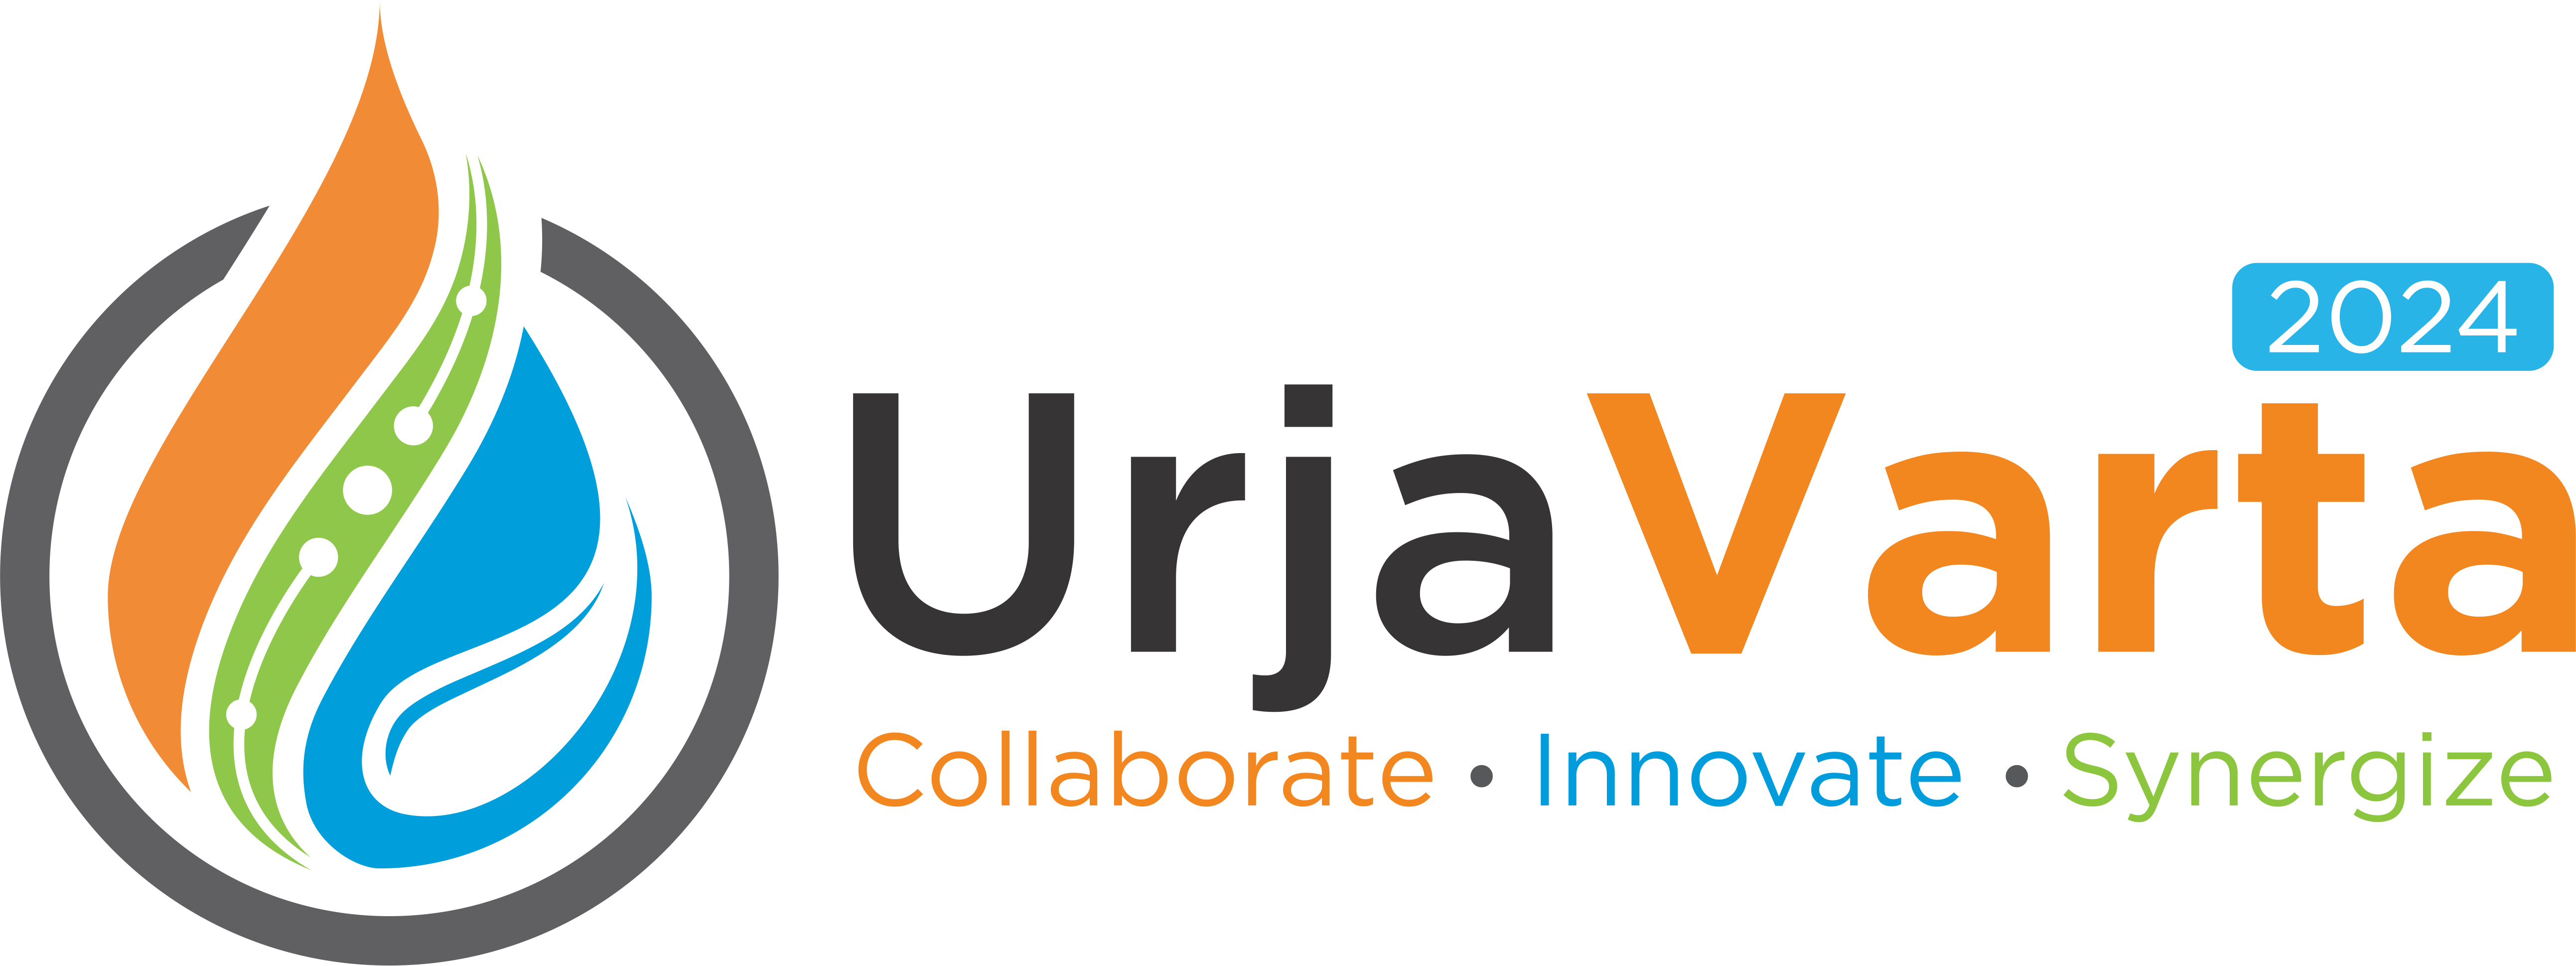 UrjaVarta Logo